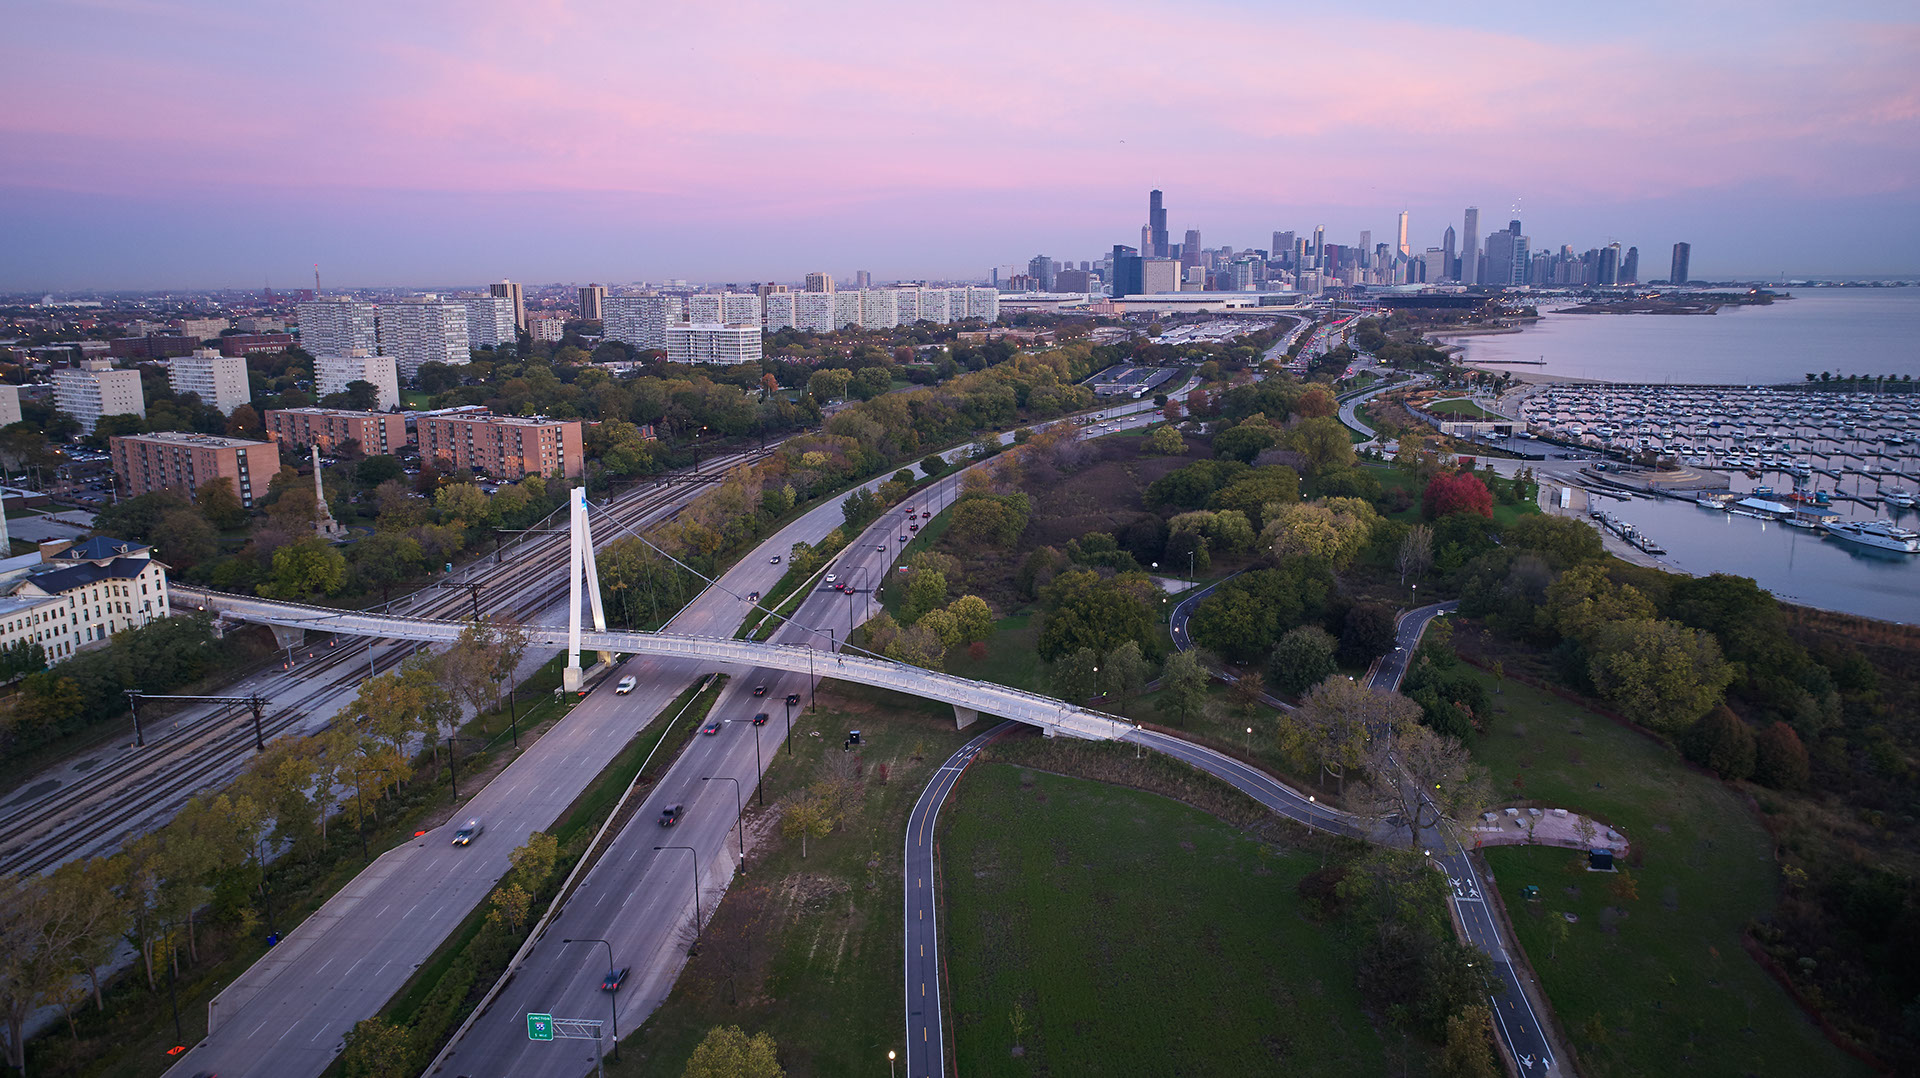 Pedestrian bridge over highway and railroad. Chicago skyline